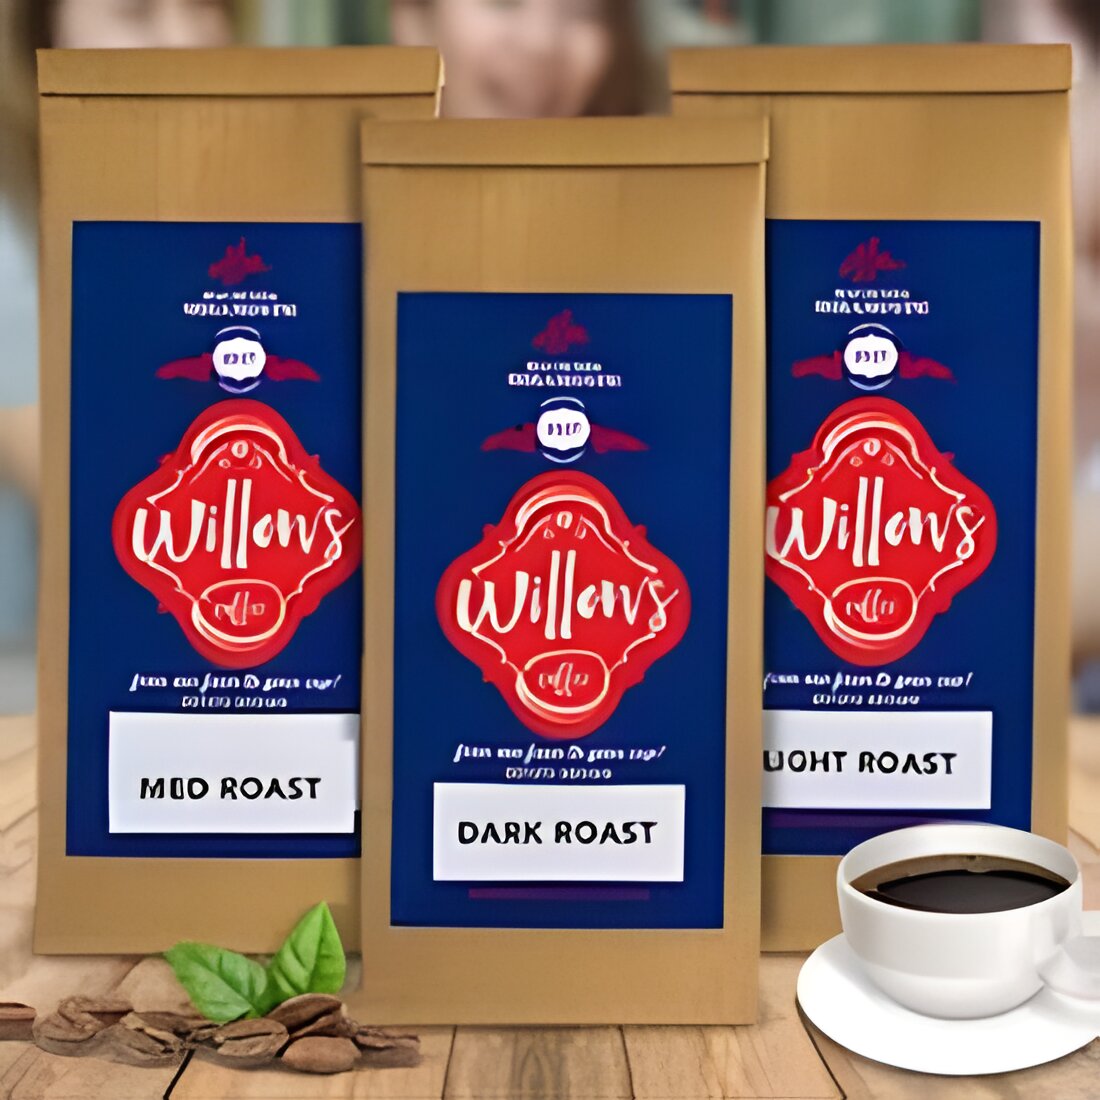 Free Willows Coffee Sample